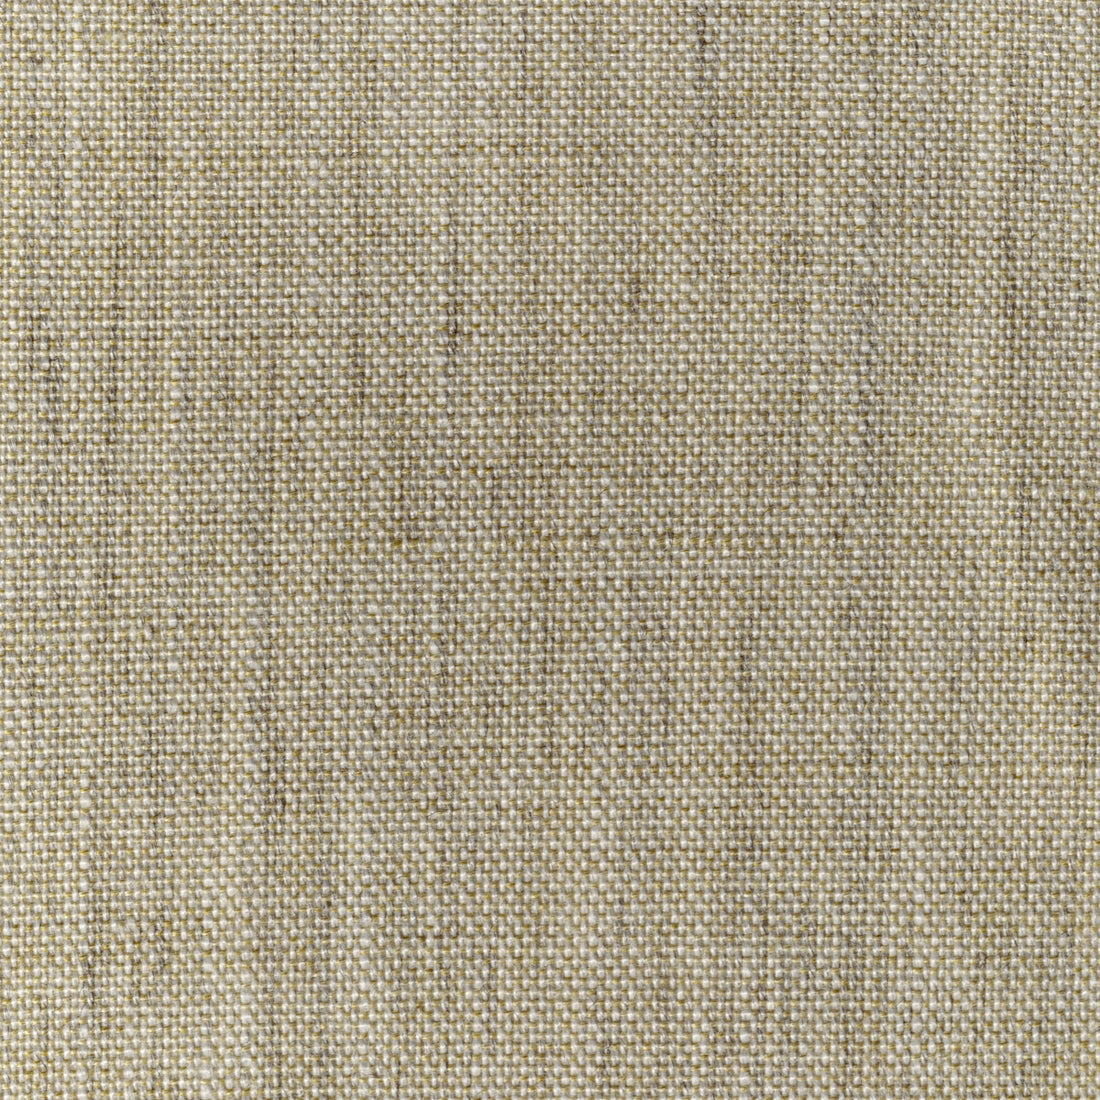 Kravet Smart fabric in 36112-1630 color - pattern 36112.1630.0 - by Kravet Smart in the Performance Kravetarmor collection